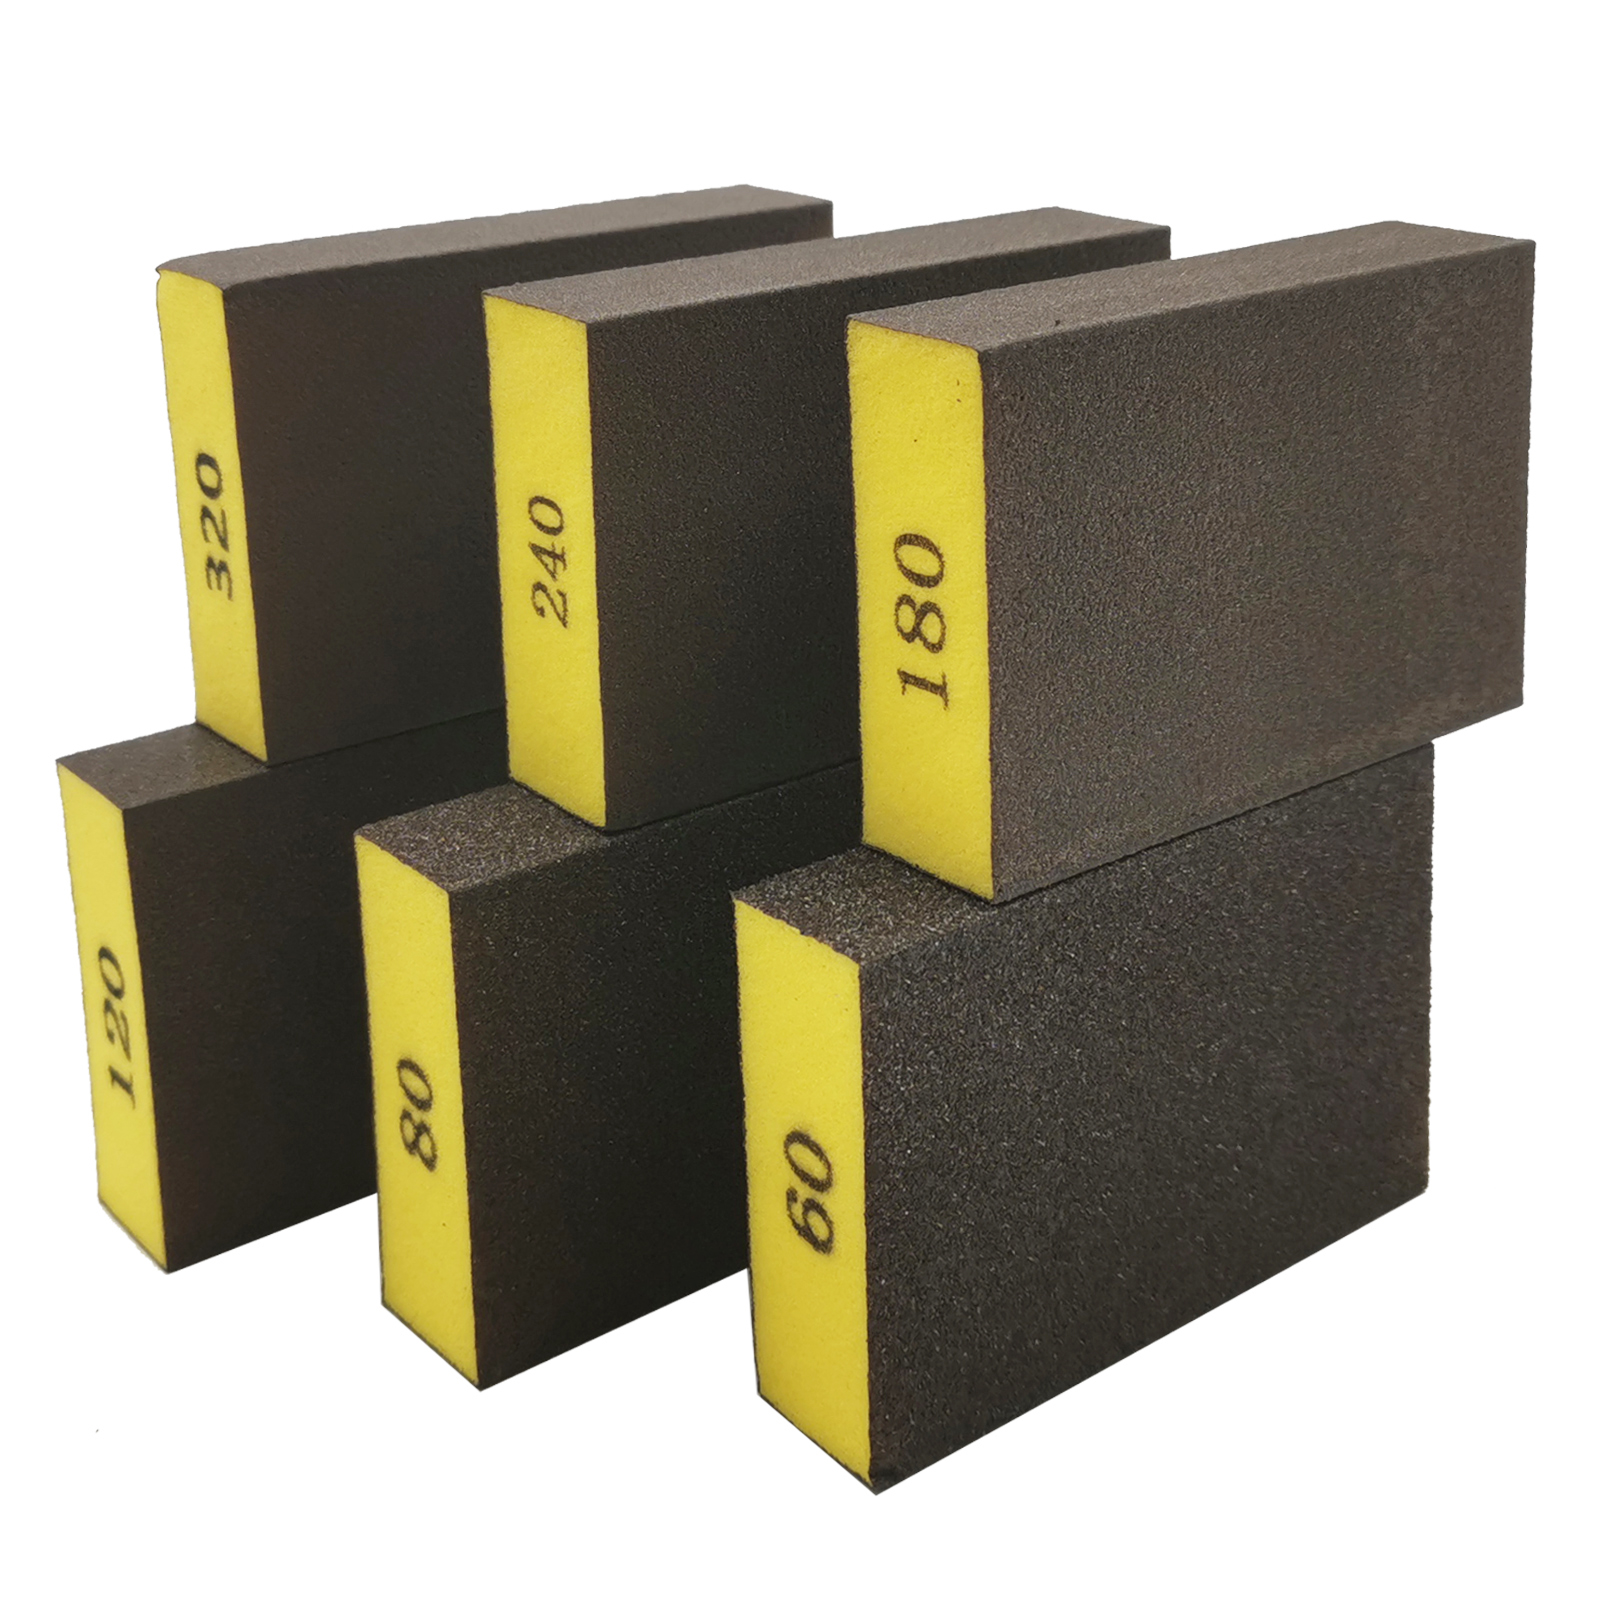 Angled Sanding Blocks 60/80/100/120/180 Grit coarse Sponge - Temu